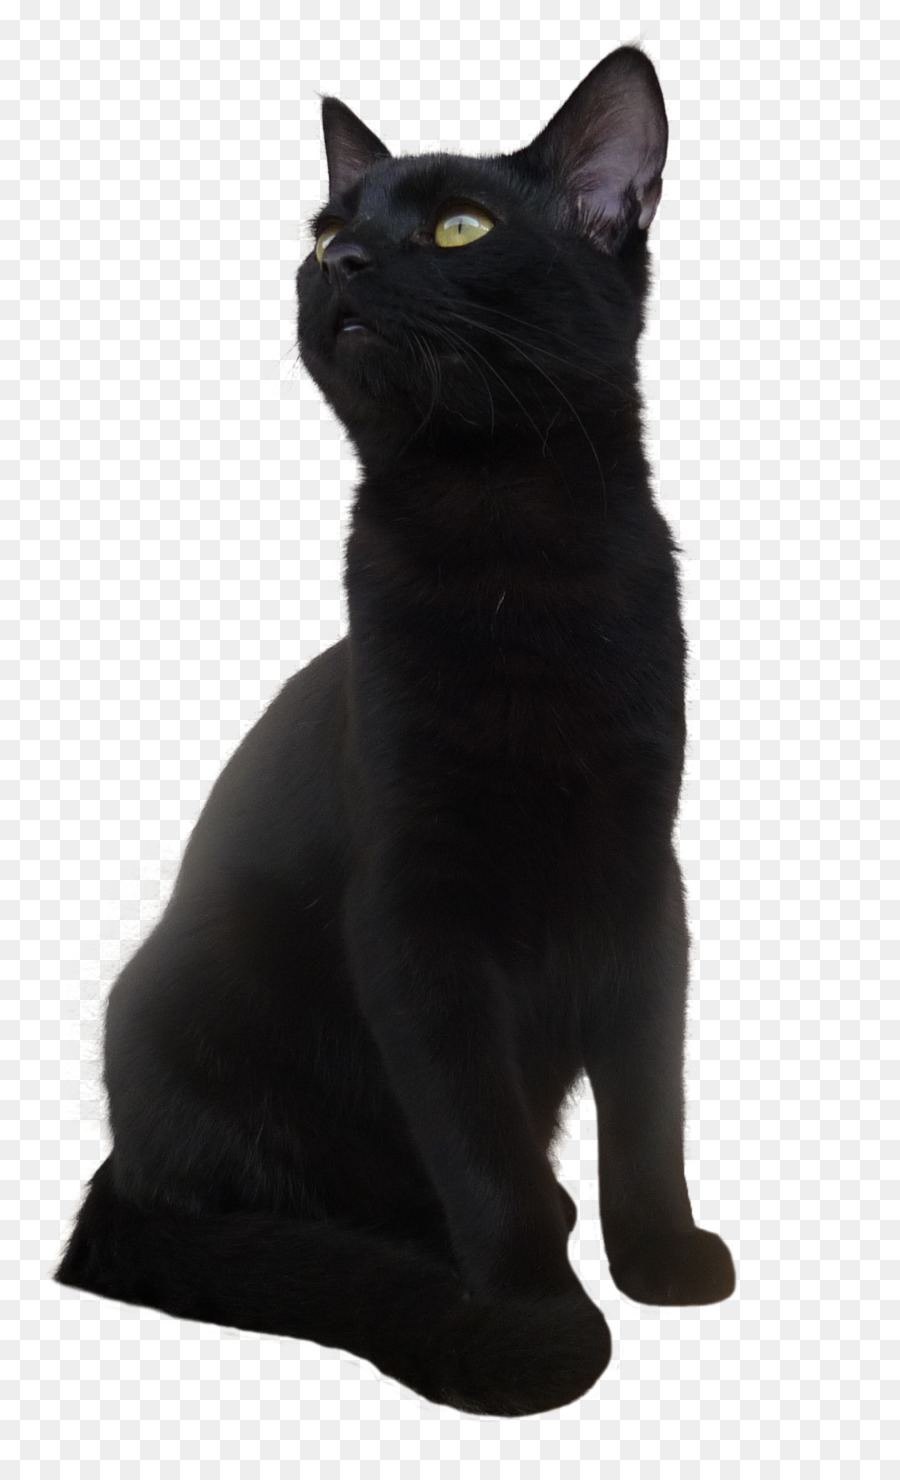 Bombay gatto Korat European shorthair gatto Nero - Gatto nero PNG Immagine Trasparente